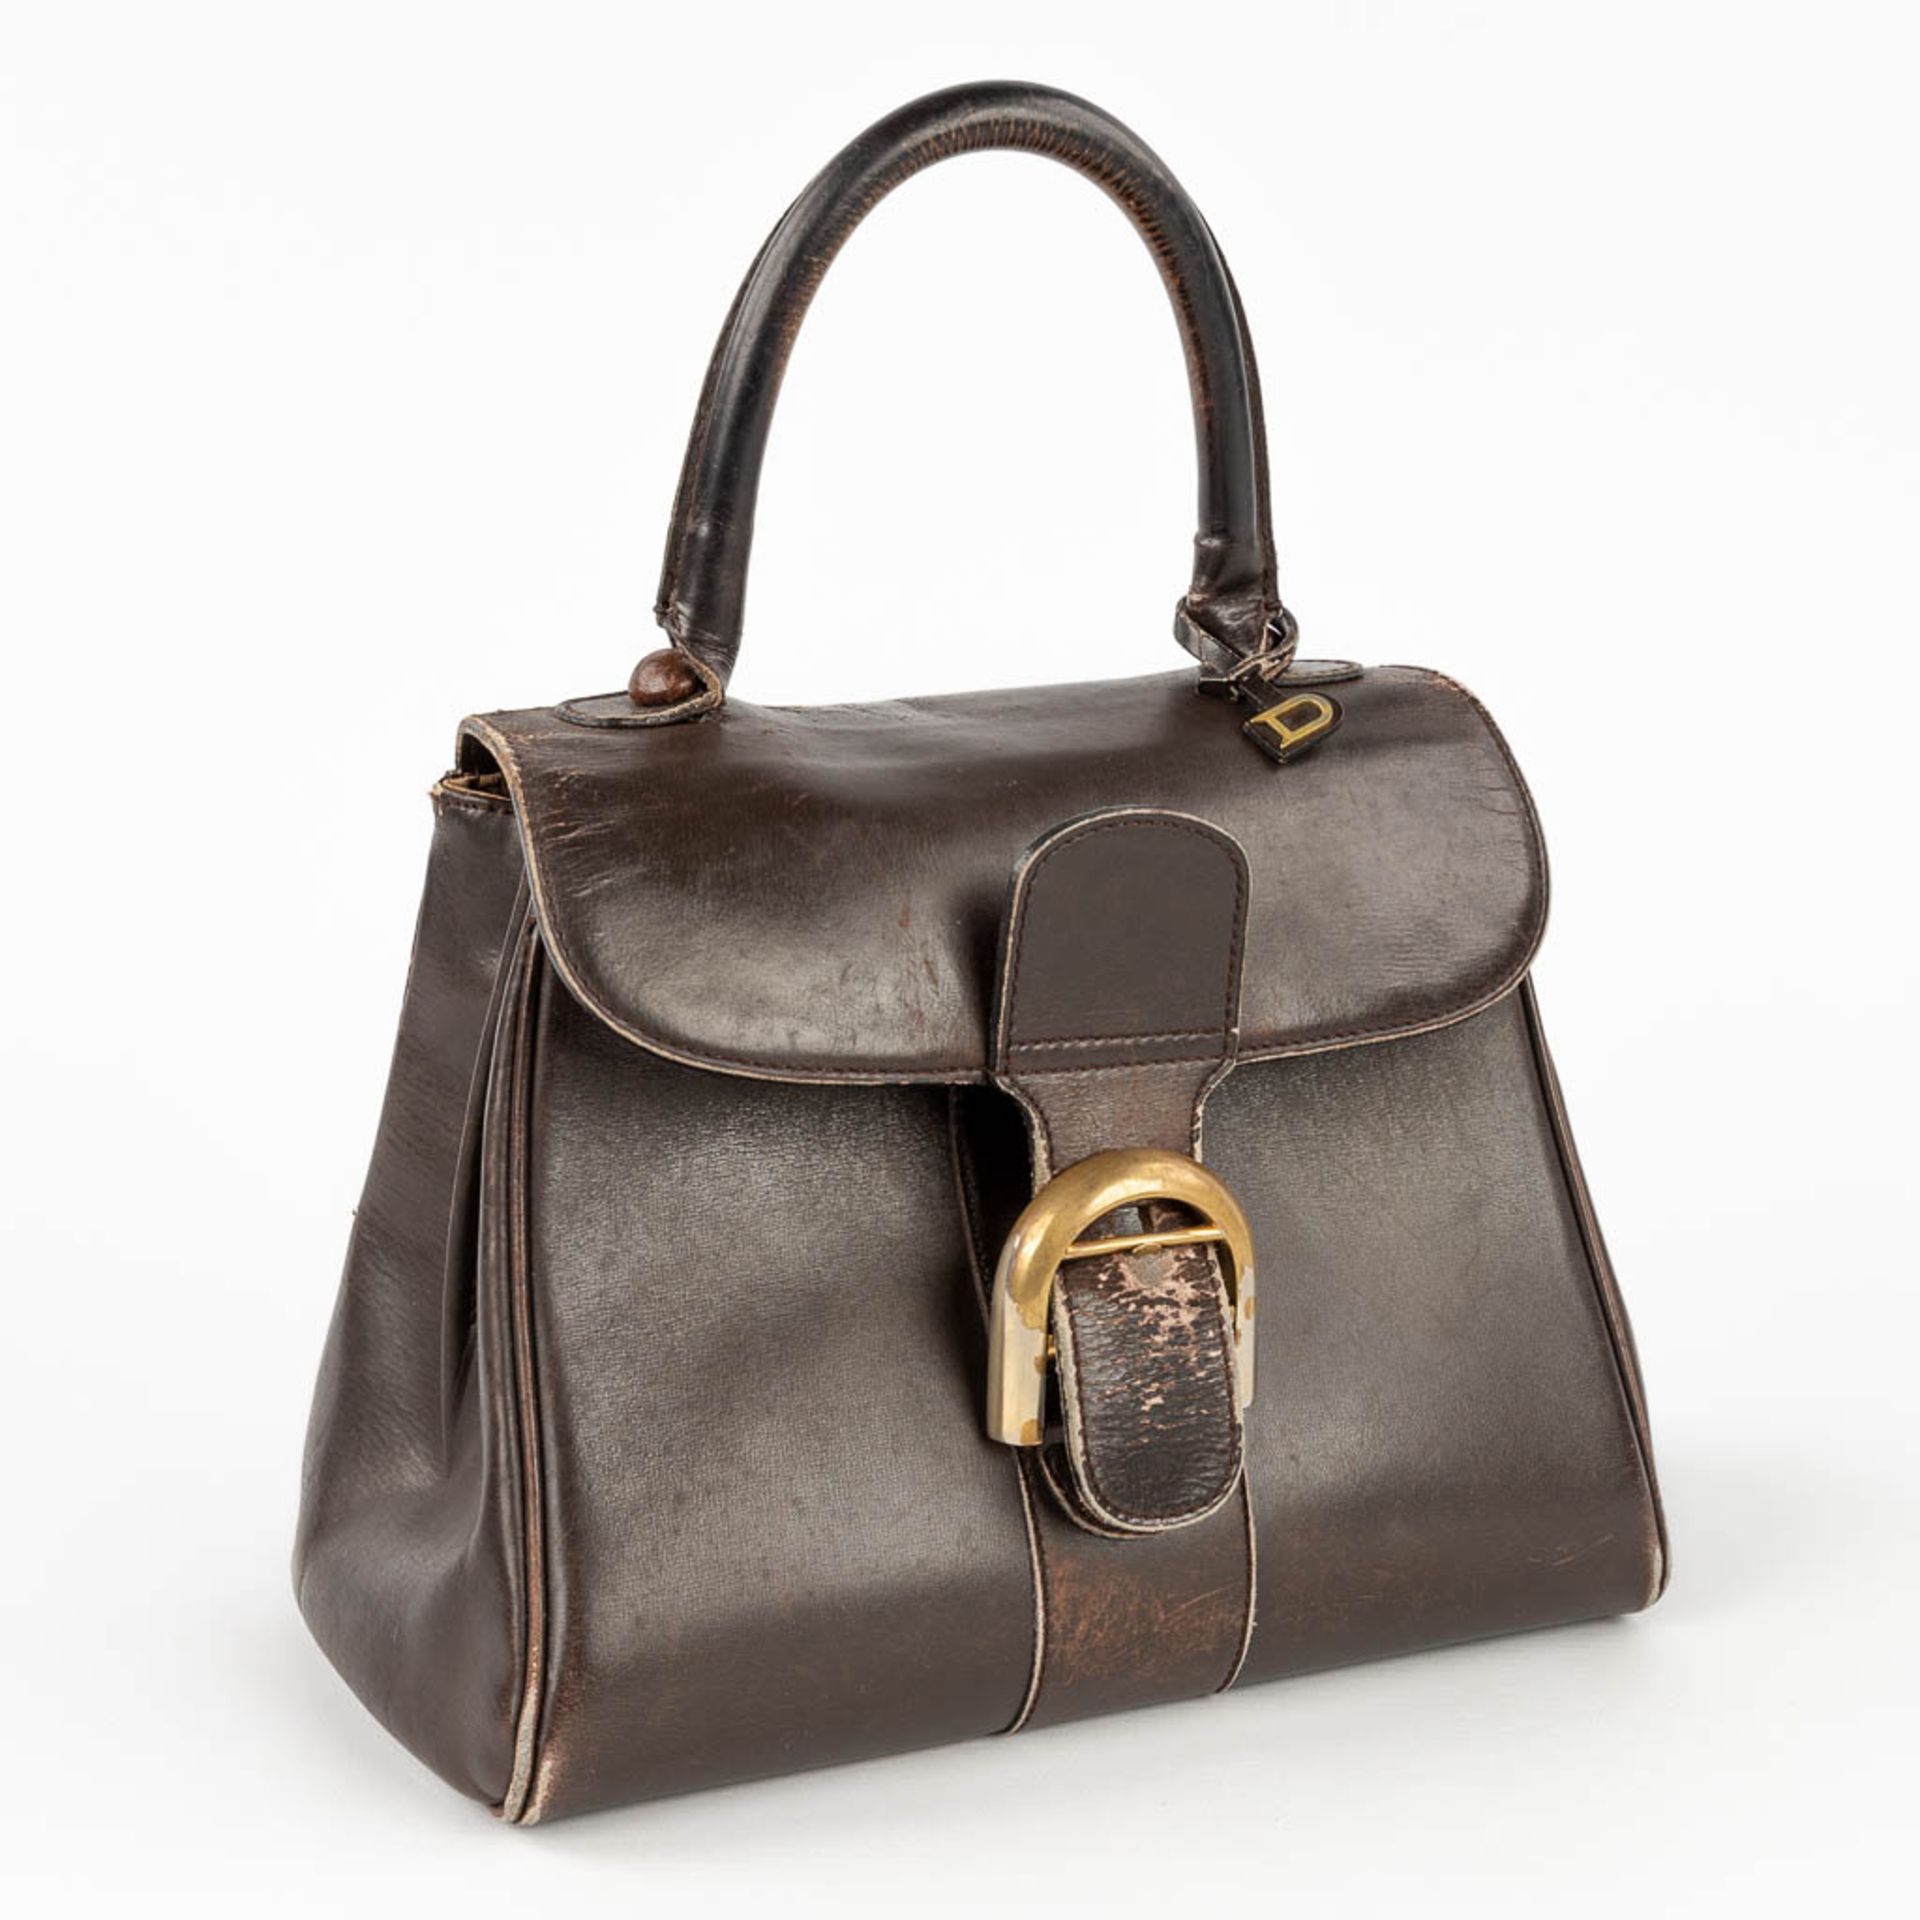 Delvaux Brillant PM, a handbag made of dark brown leather. Circa 1950. (W: 26 x H: 30 cm) - Image 3 of 19